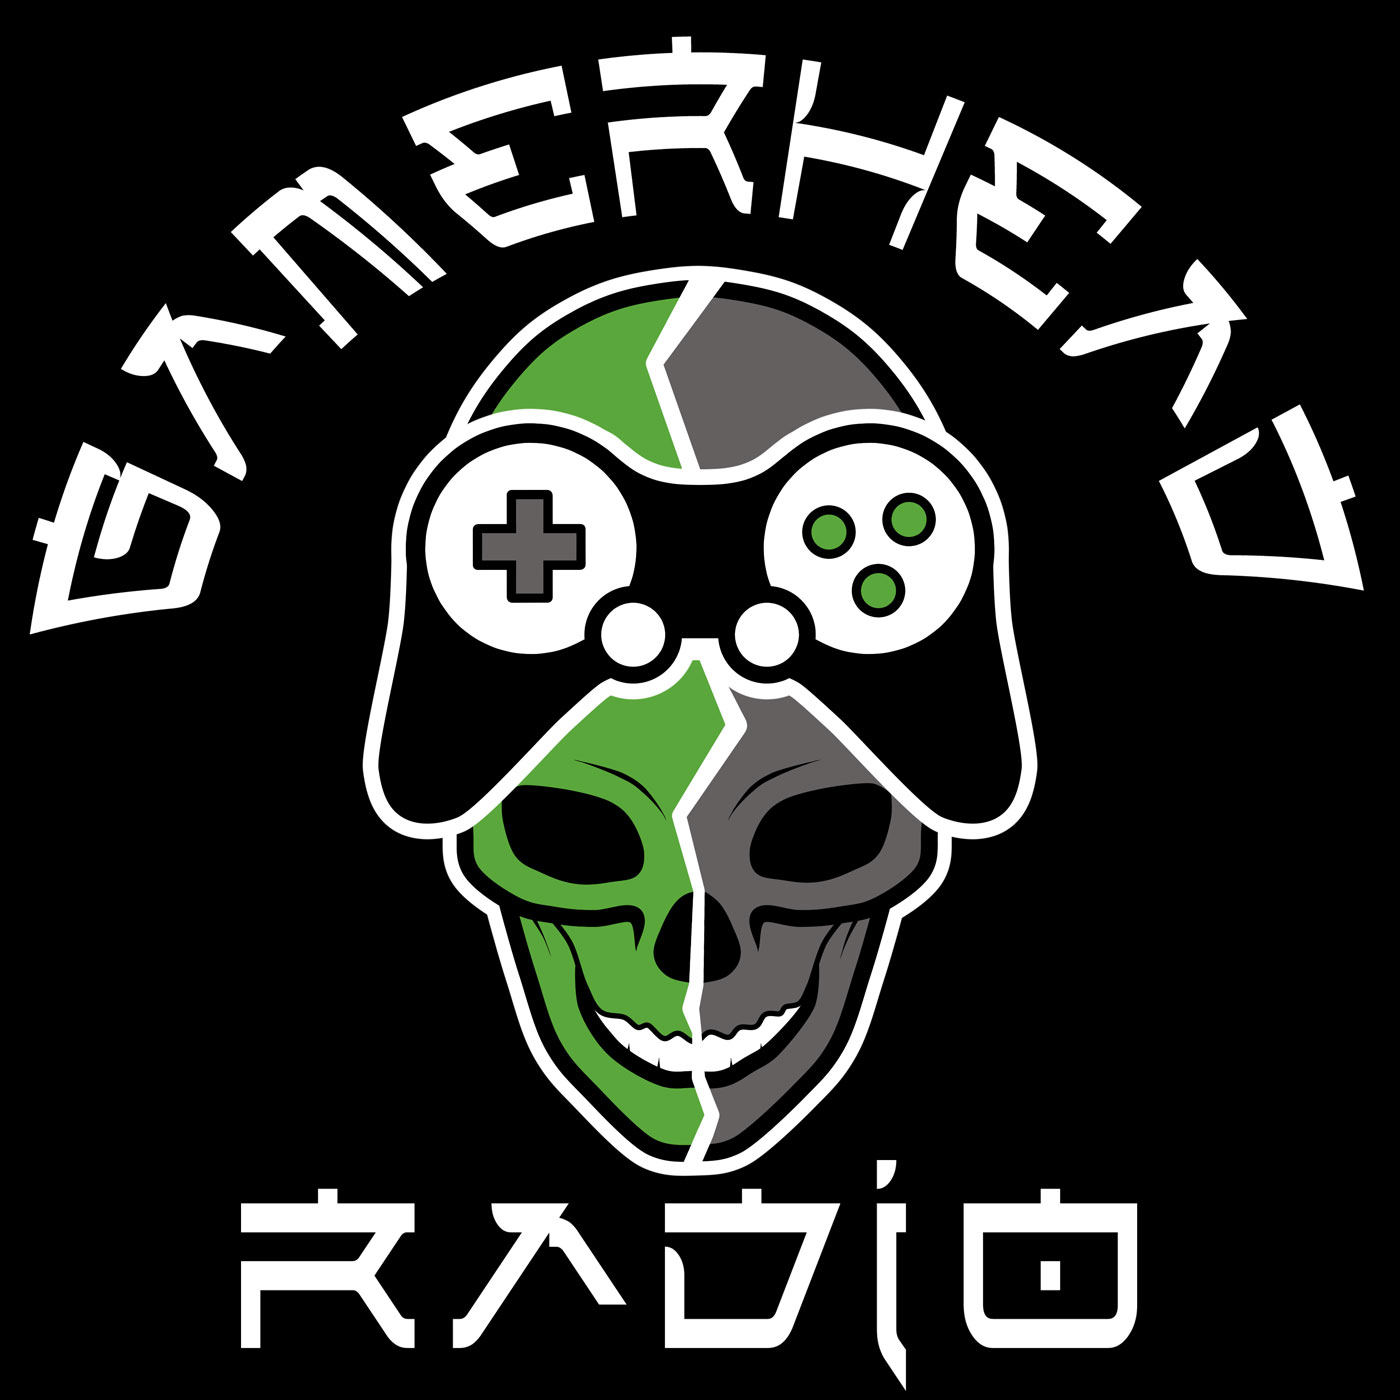 Gamerhead Radio